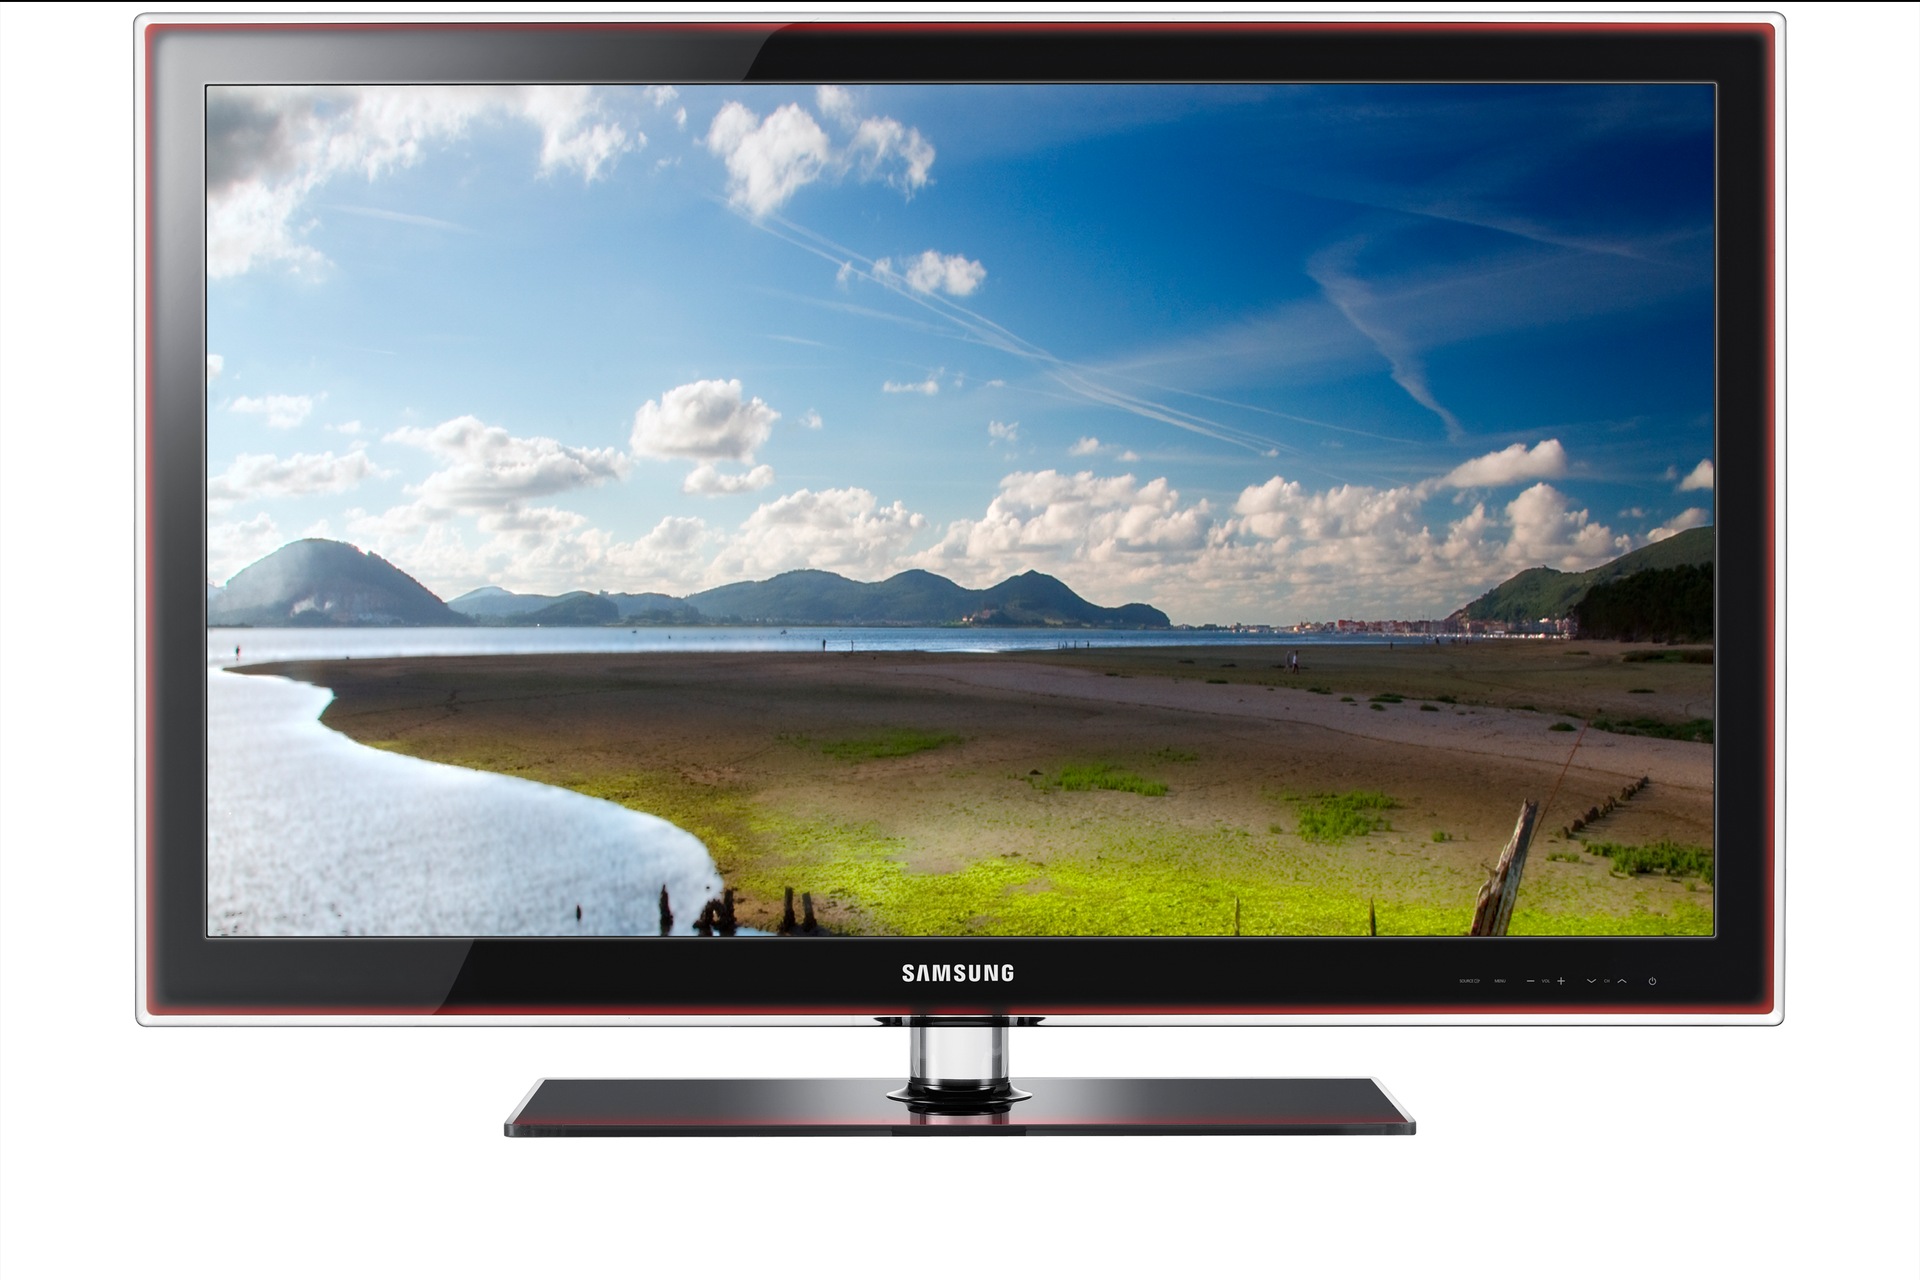 Цифровой телевизор самсунг. Samsung led 40 Smart TV 2013. Телевизор Samsung 40”. Модель le40d550k1wx. Телевизор самсунг лед 40. HDTV самсунг 32 80 дюймов.